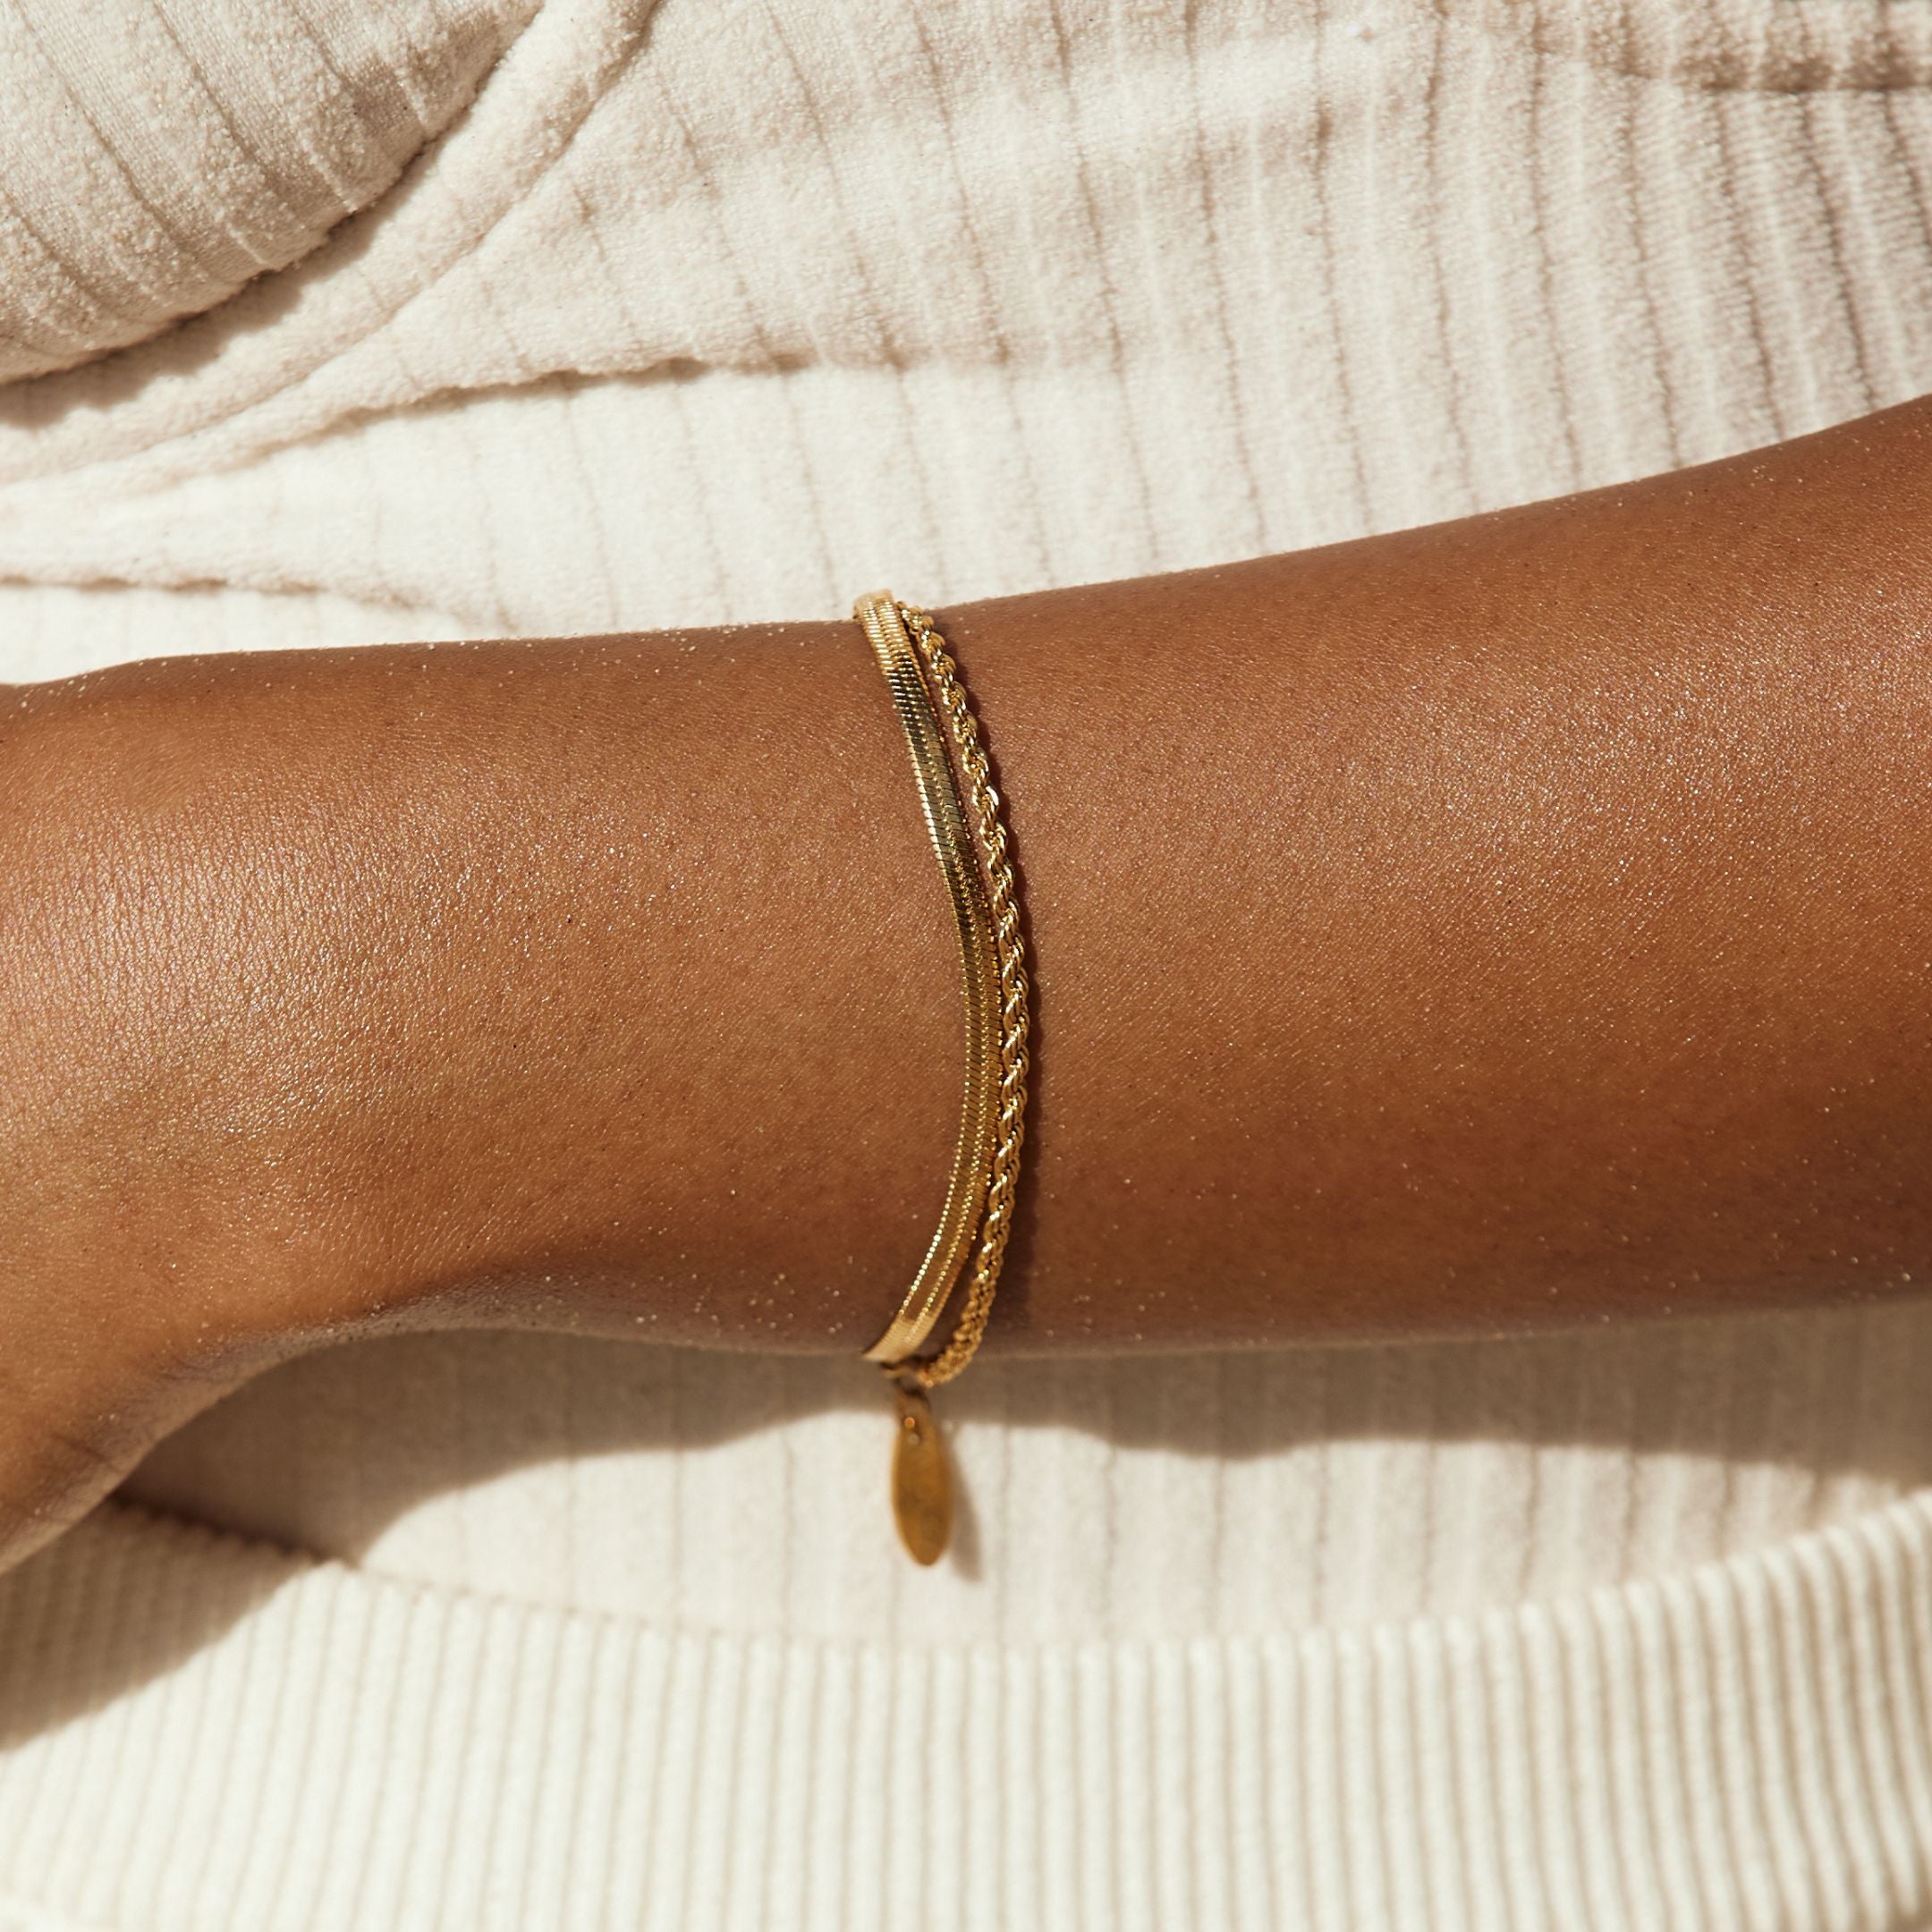 Simple gold bracelets